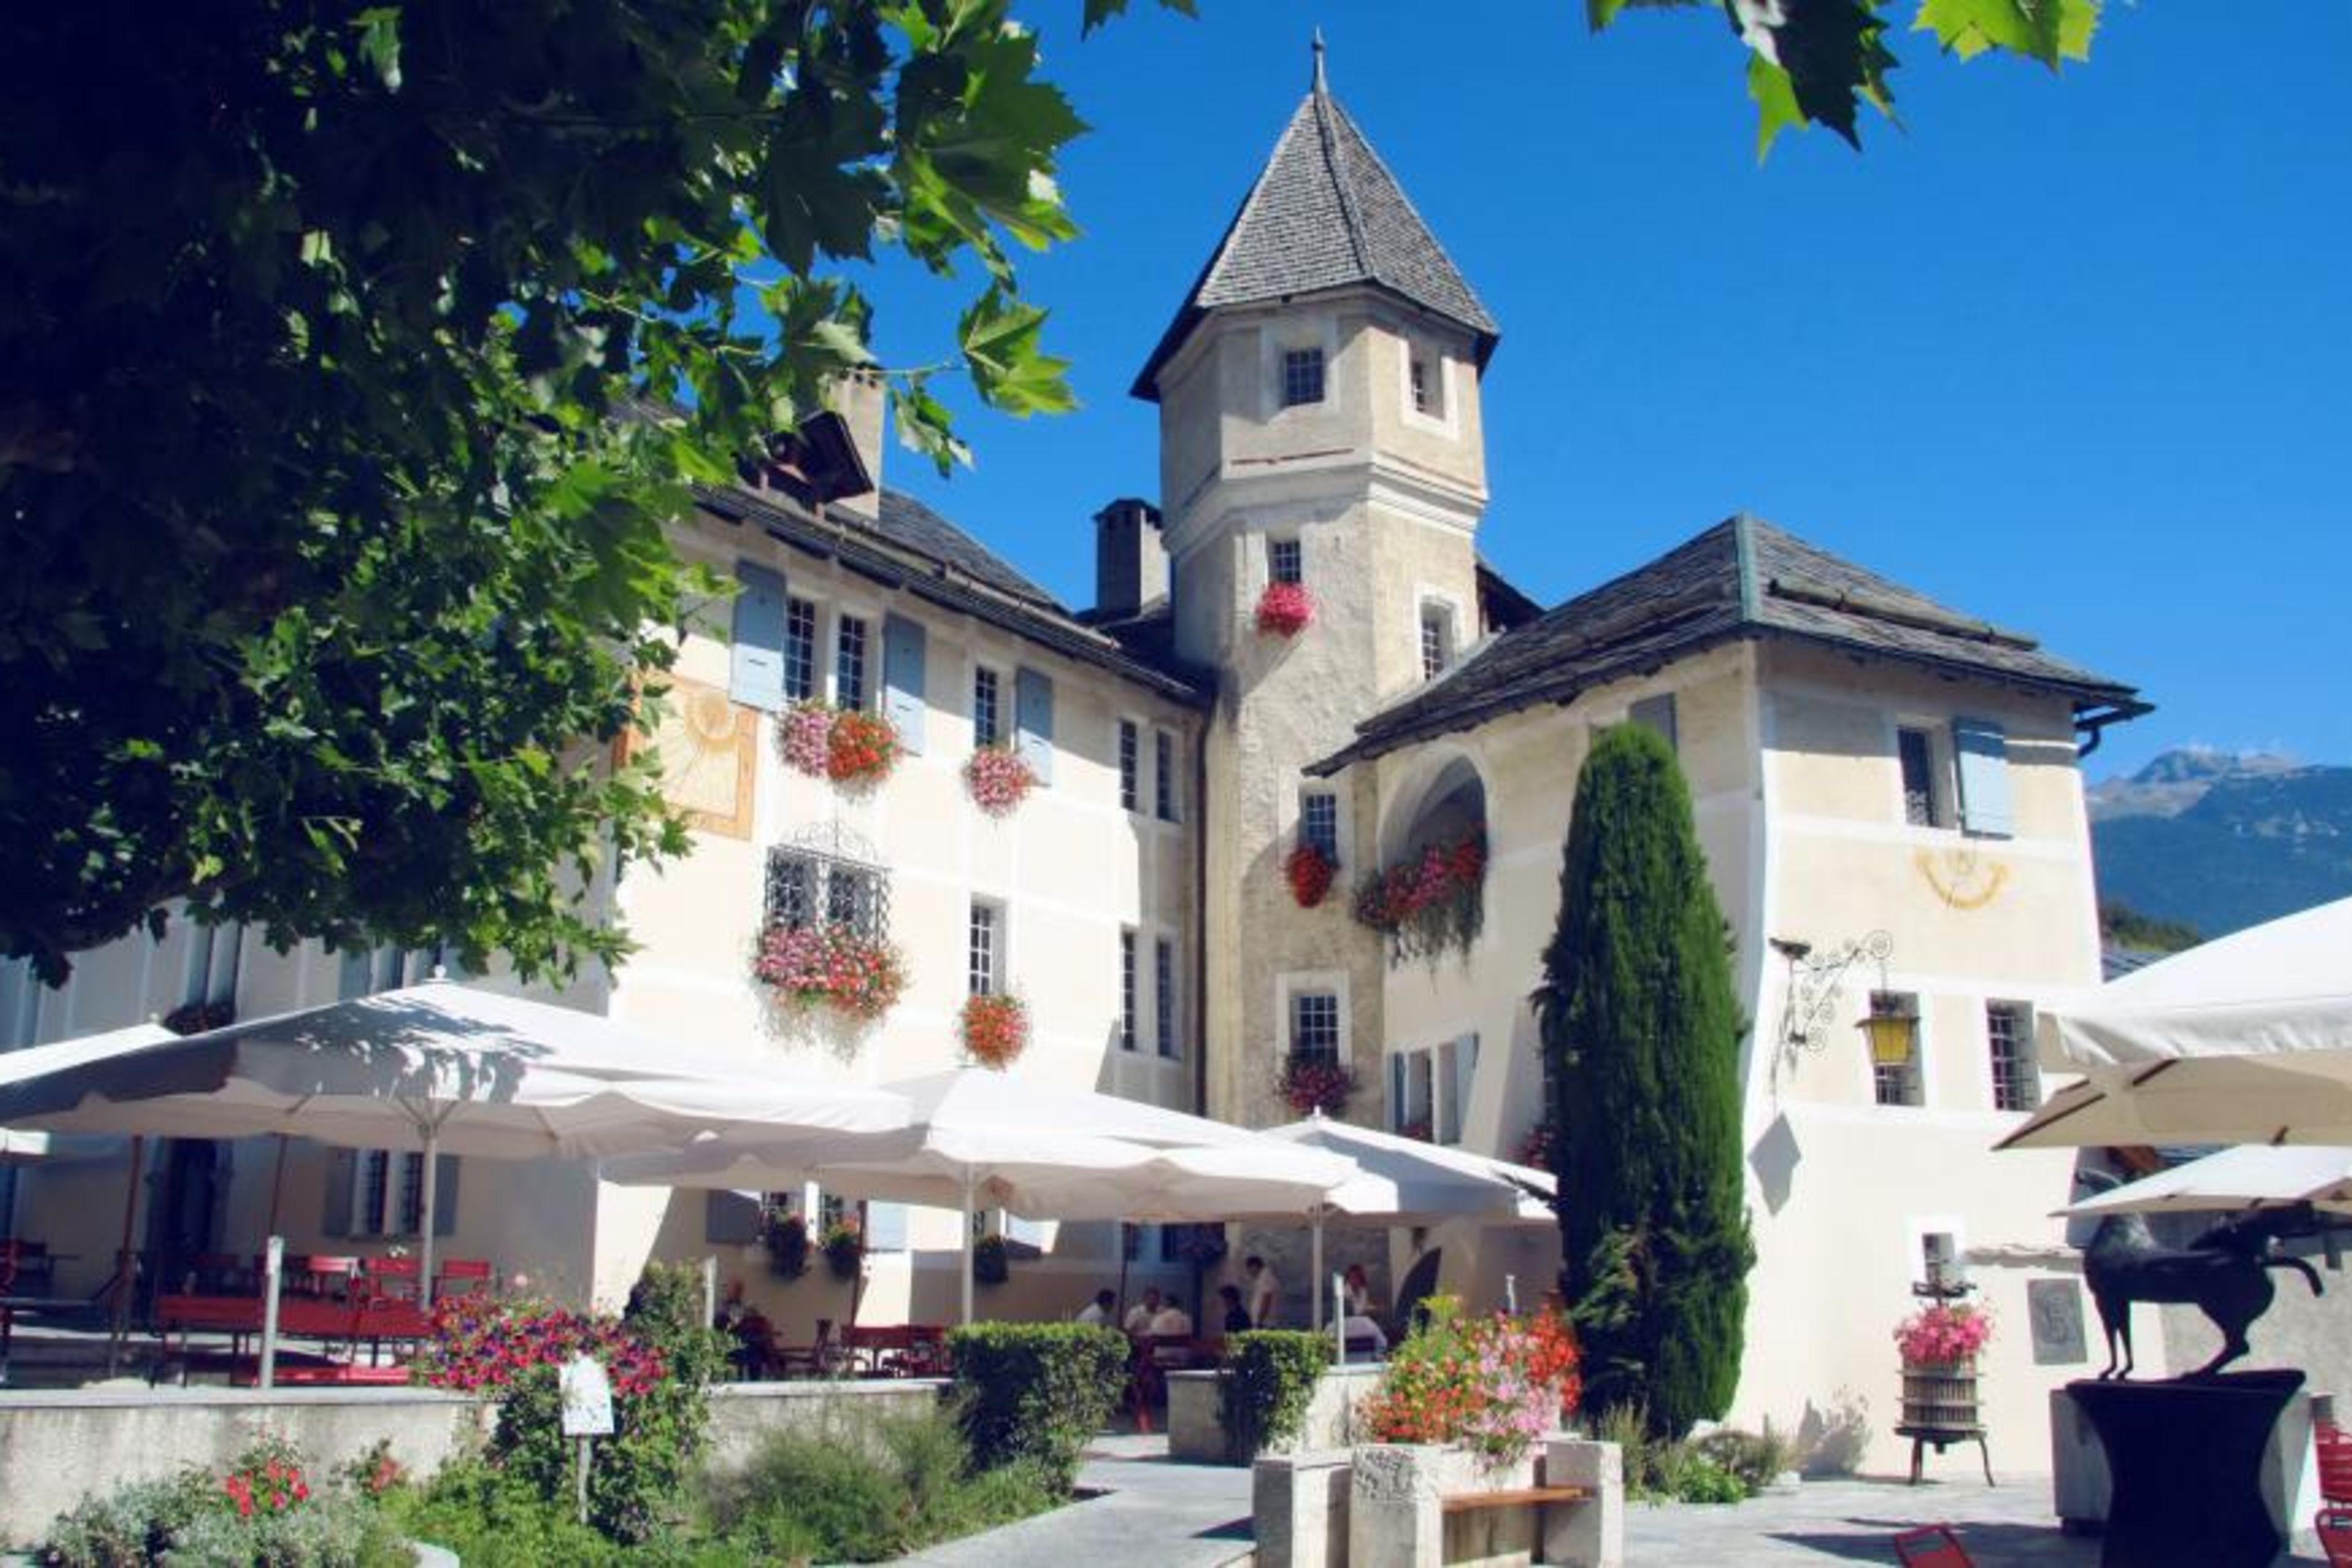 Point of sale Château de Villa, Sierre Valais, Switzerland